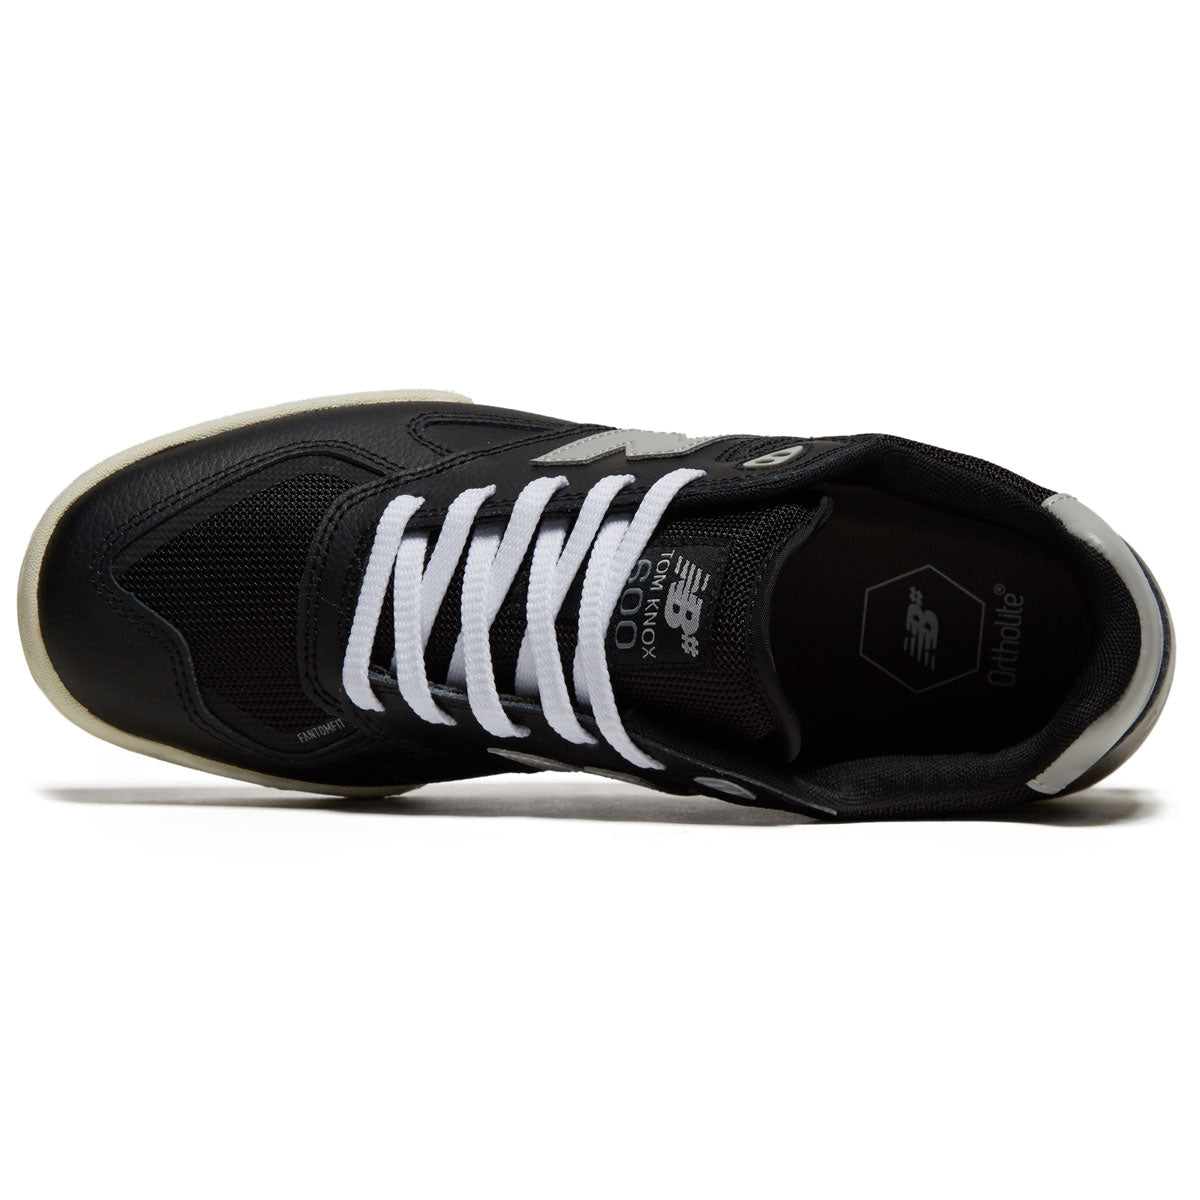 New Balance 600 Tom Knox Shoes - Black image 3